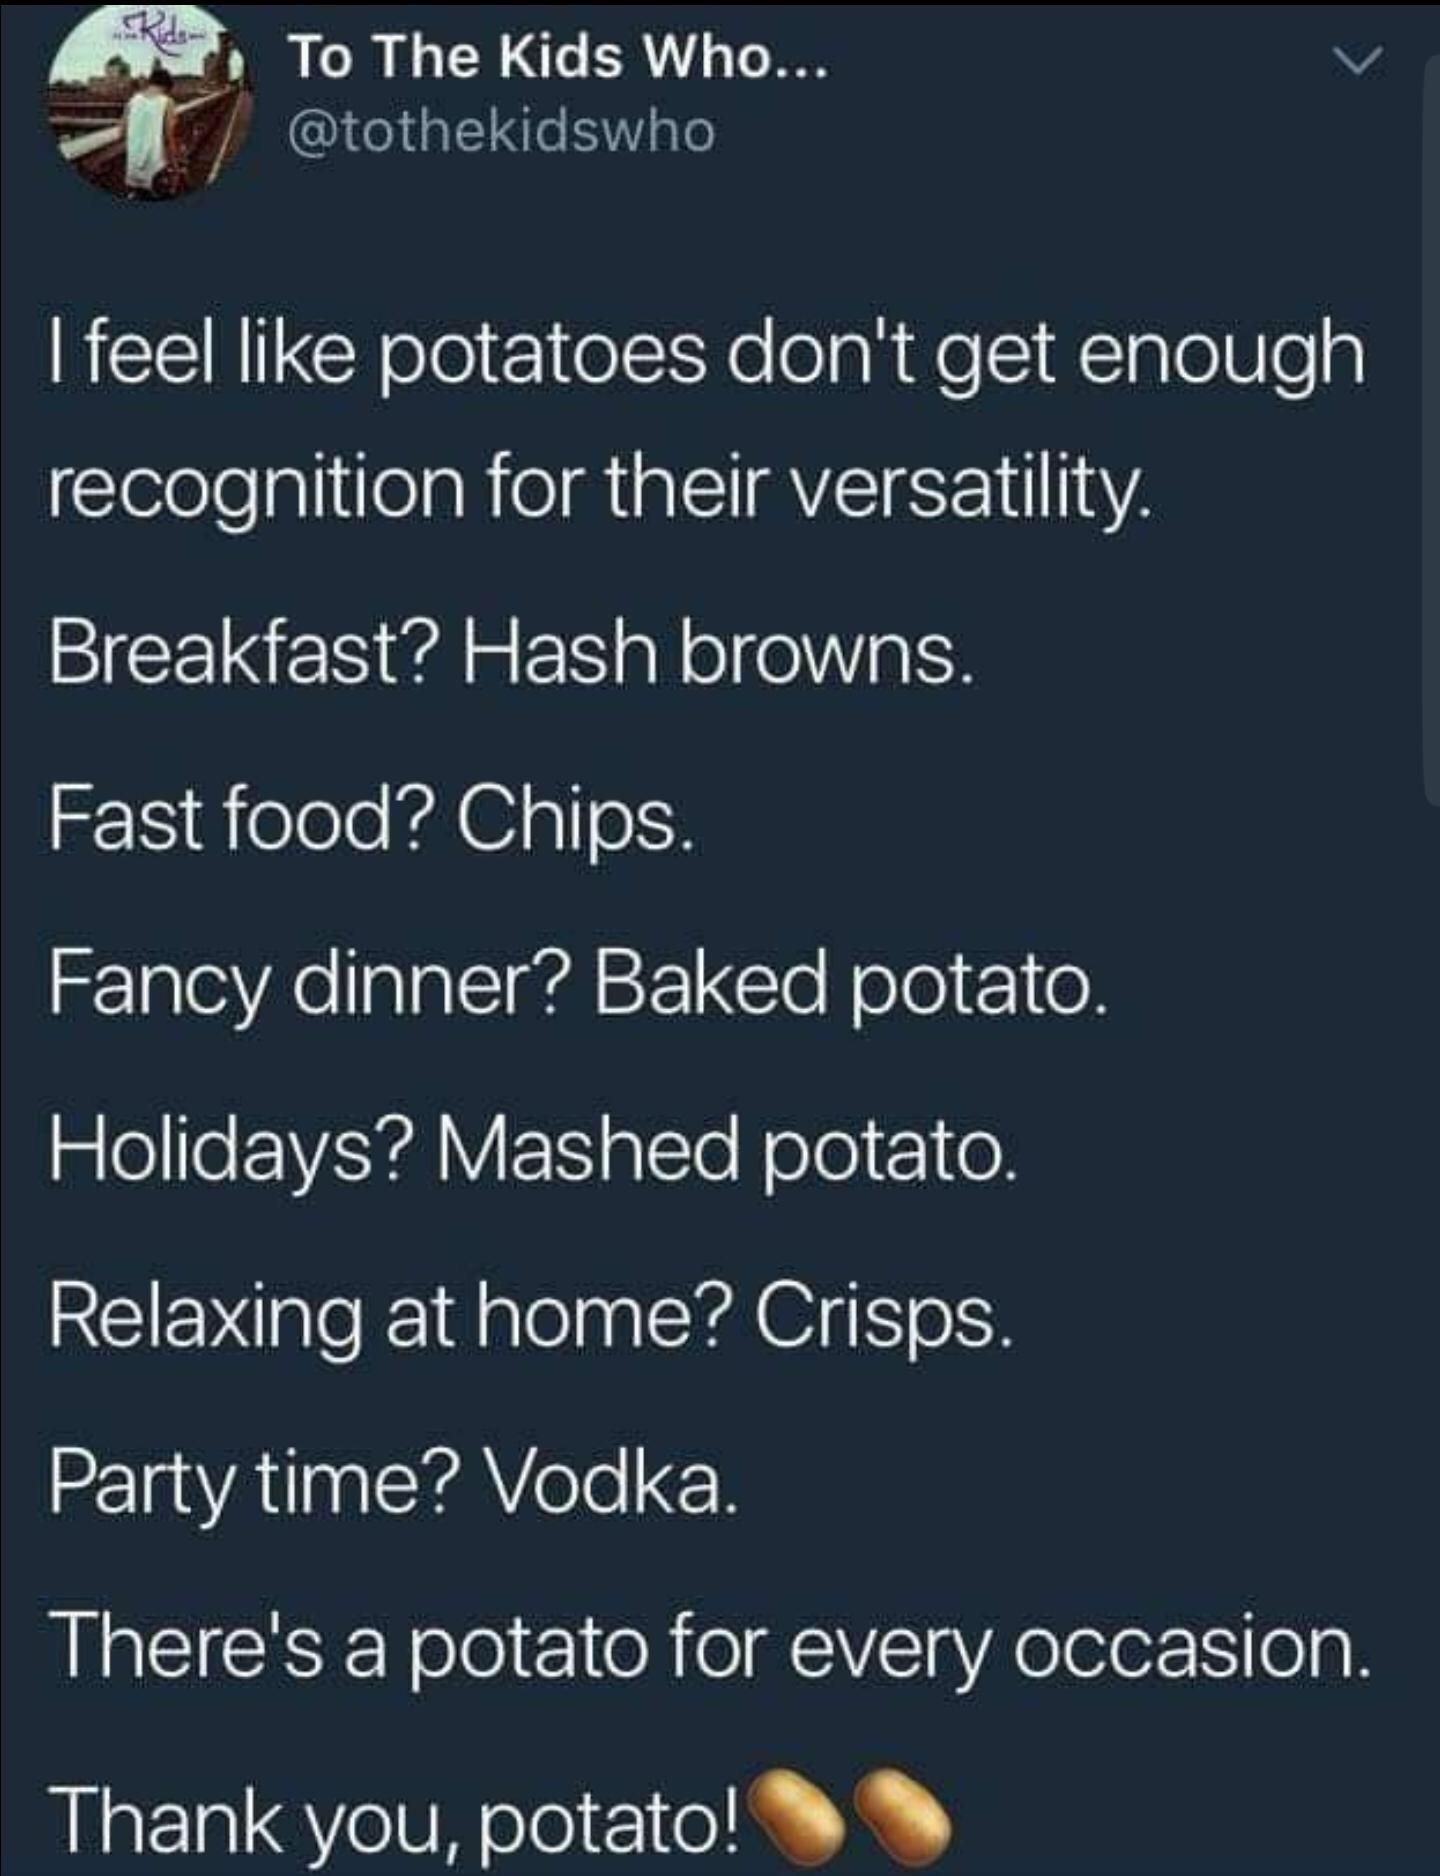 We don’t grow enough potato’s